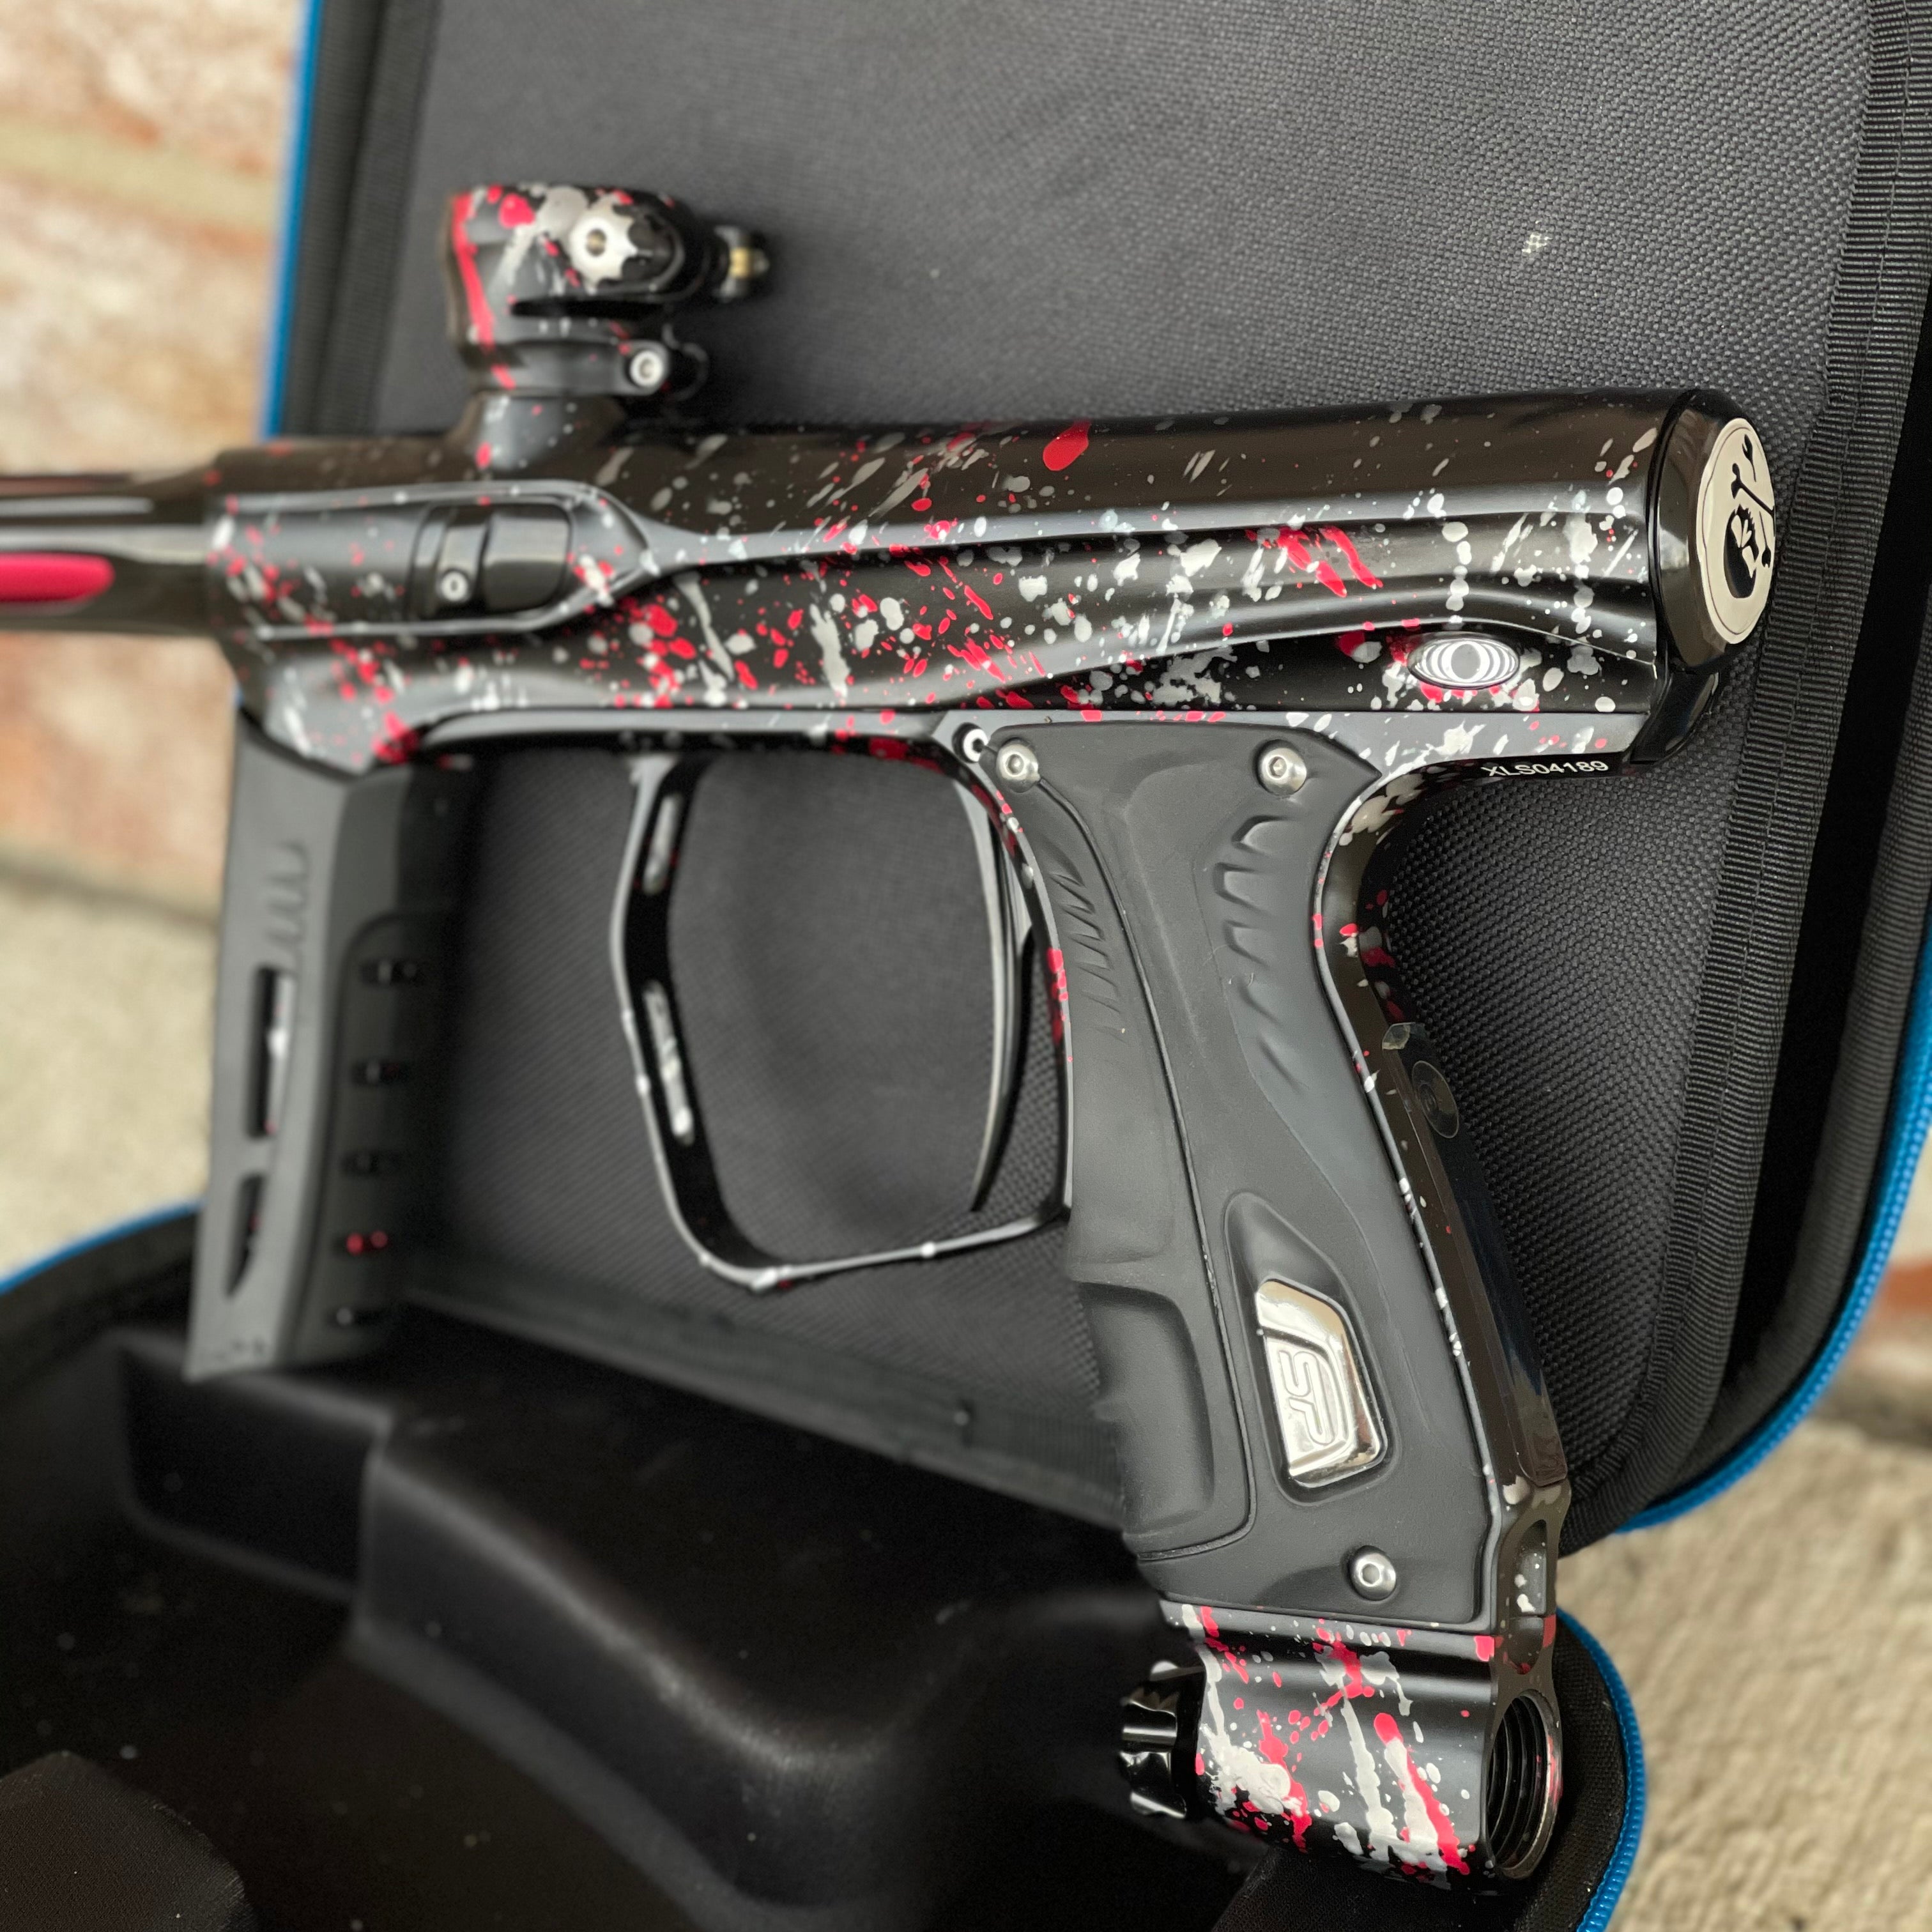 Used Shocker XLS Paintball Gun - Punishers Edition #8 - w/ Adrenaline CVO Frame